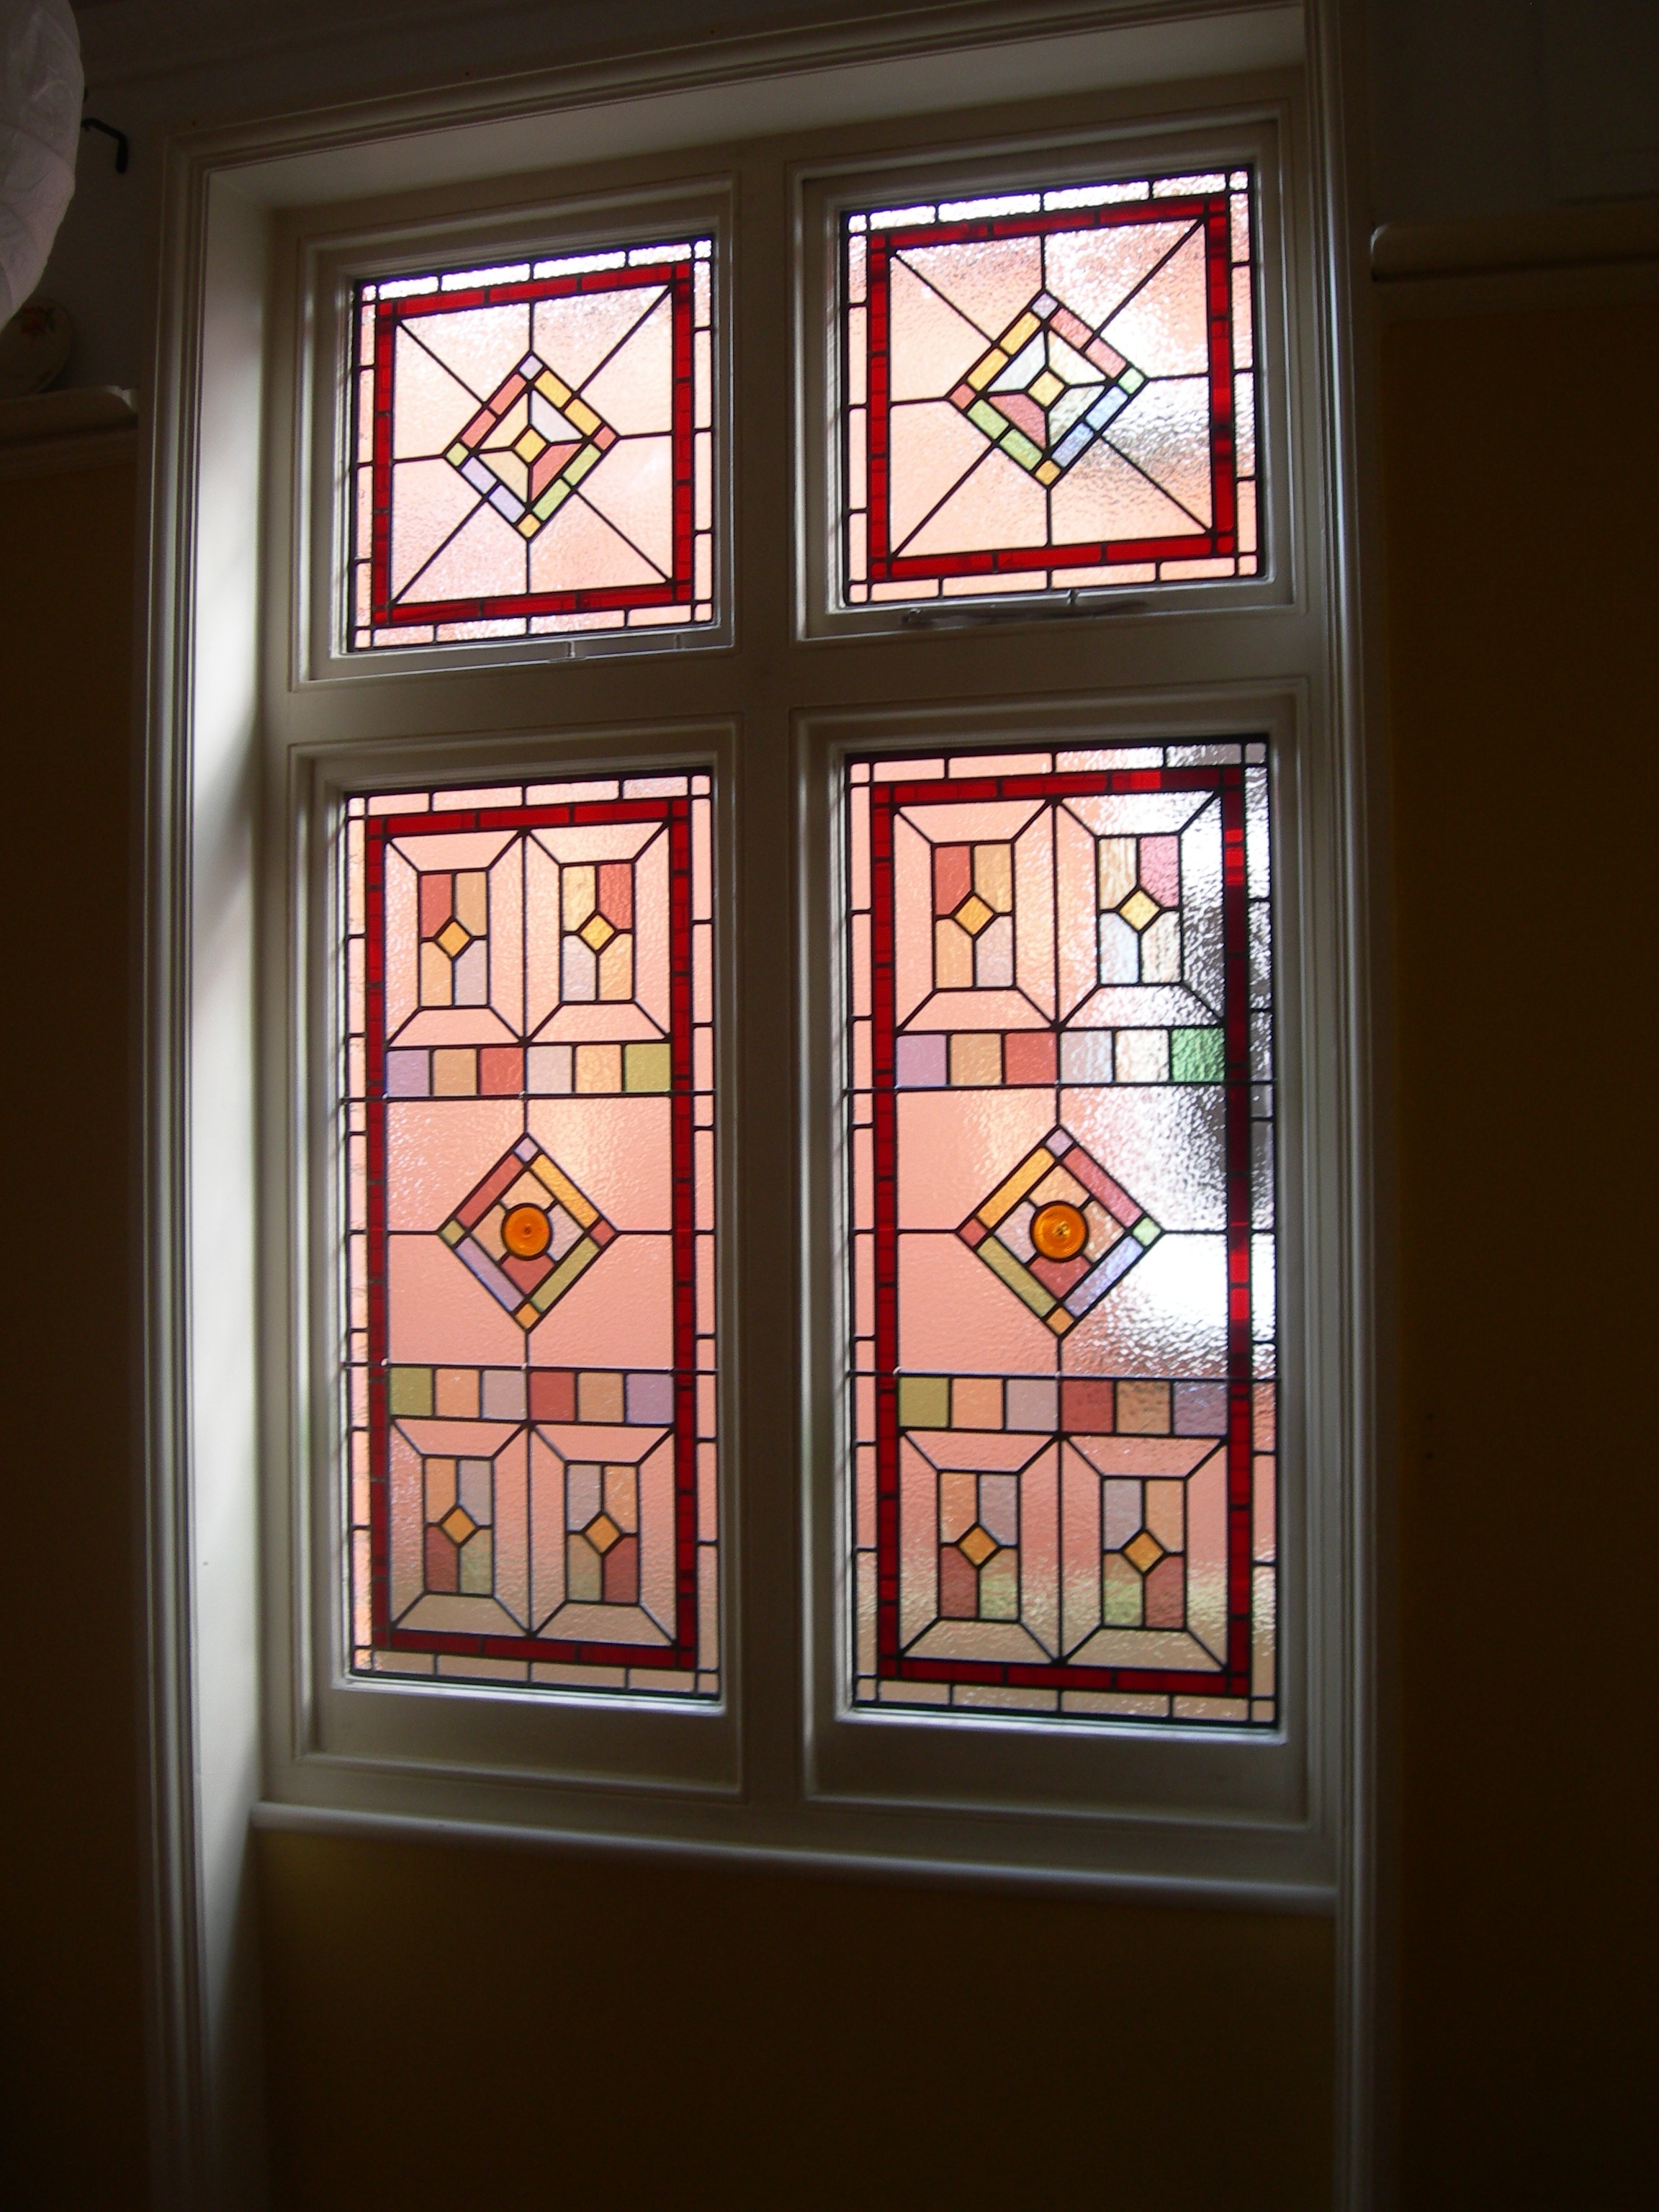 Window panels